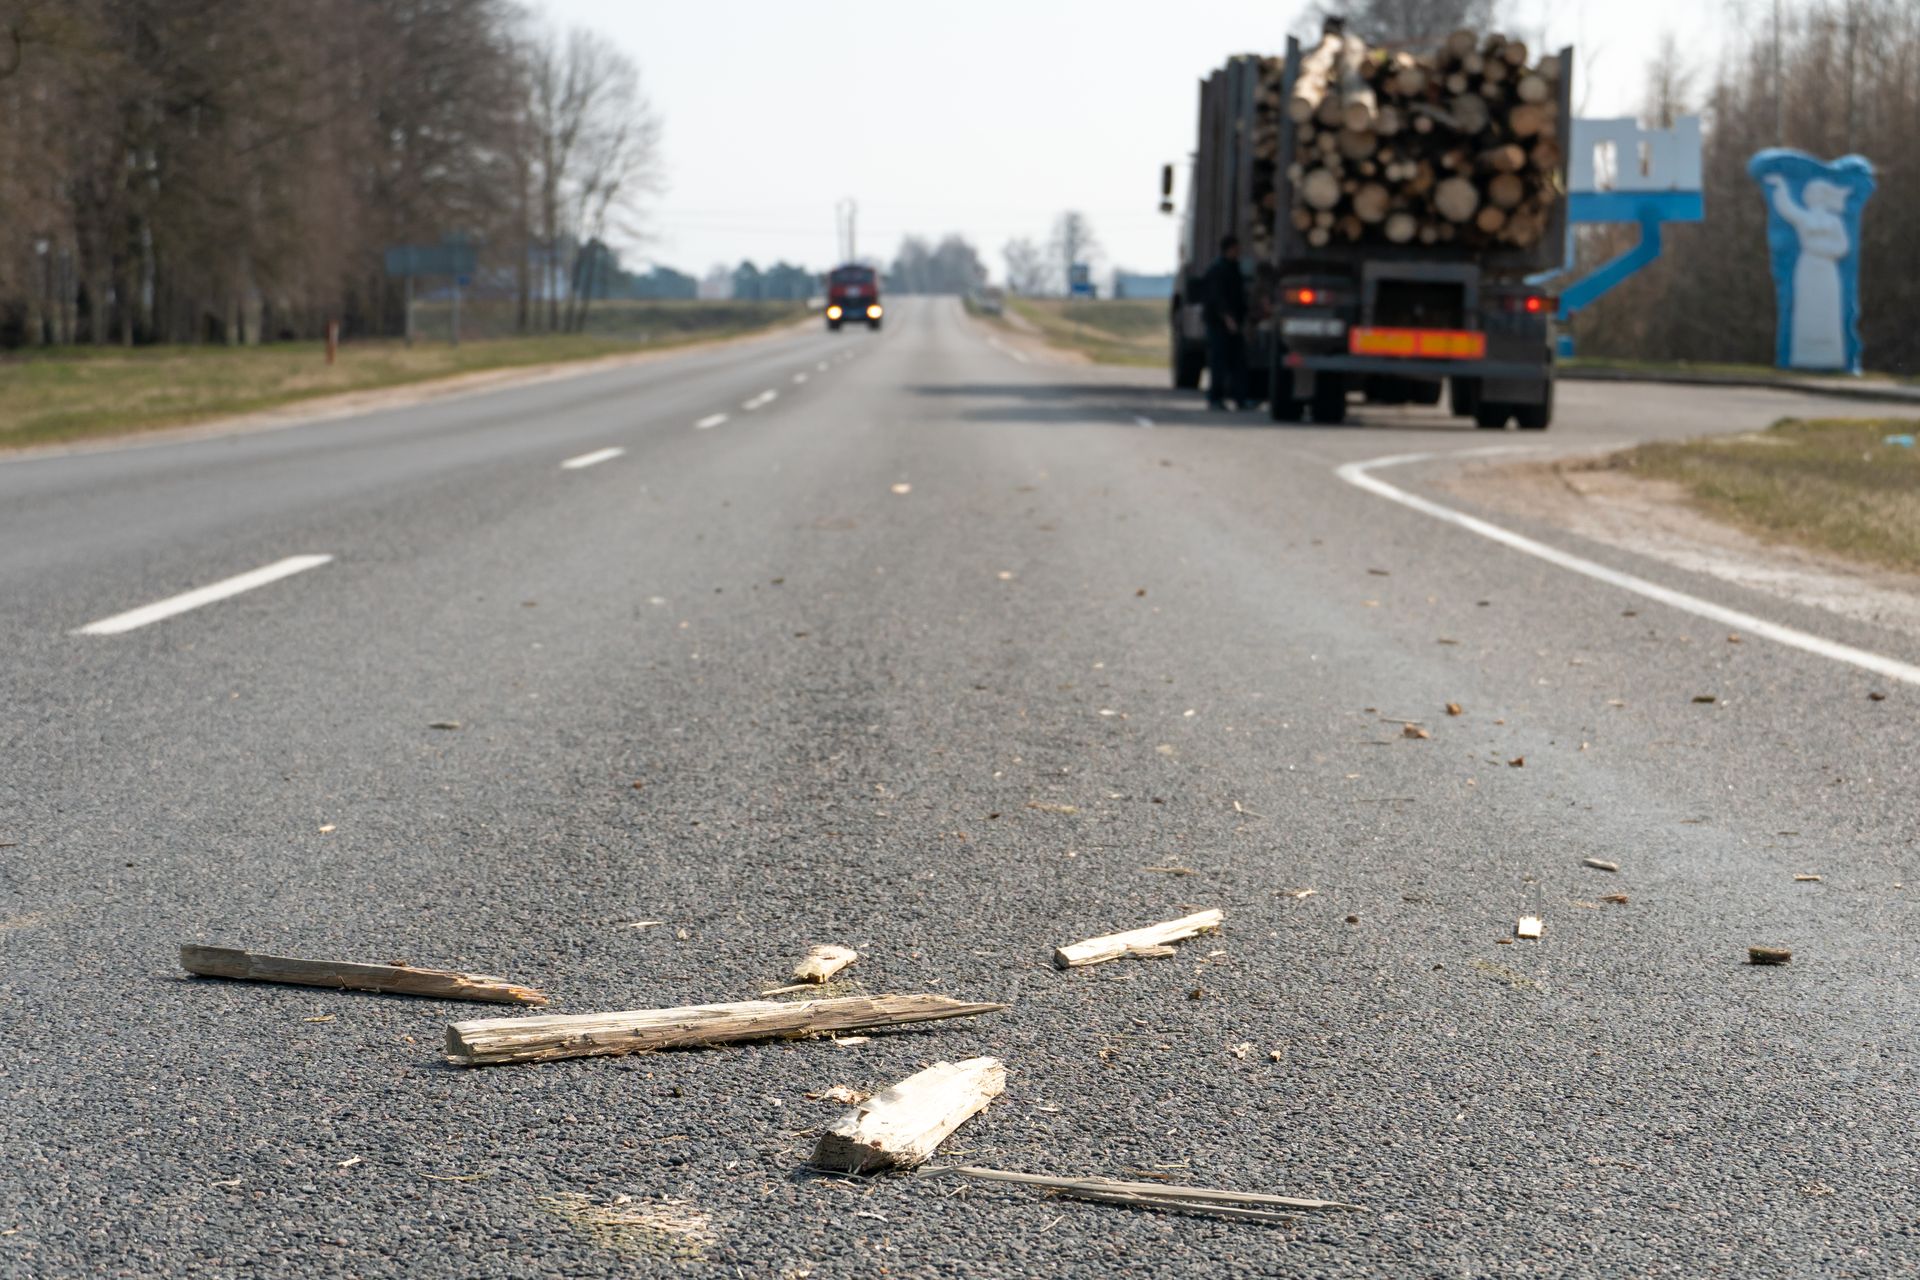 Debris on Road - Blameless accidents